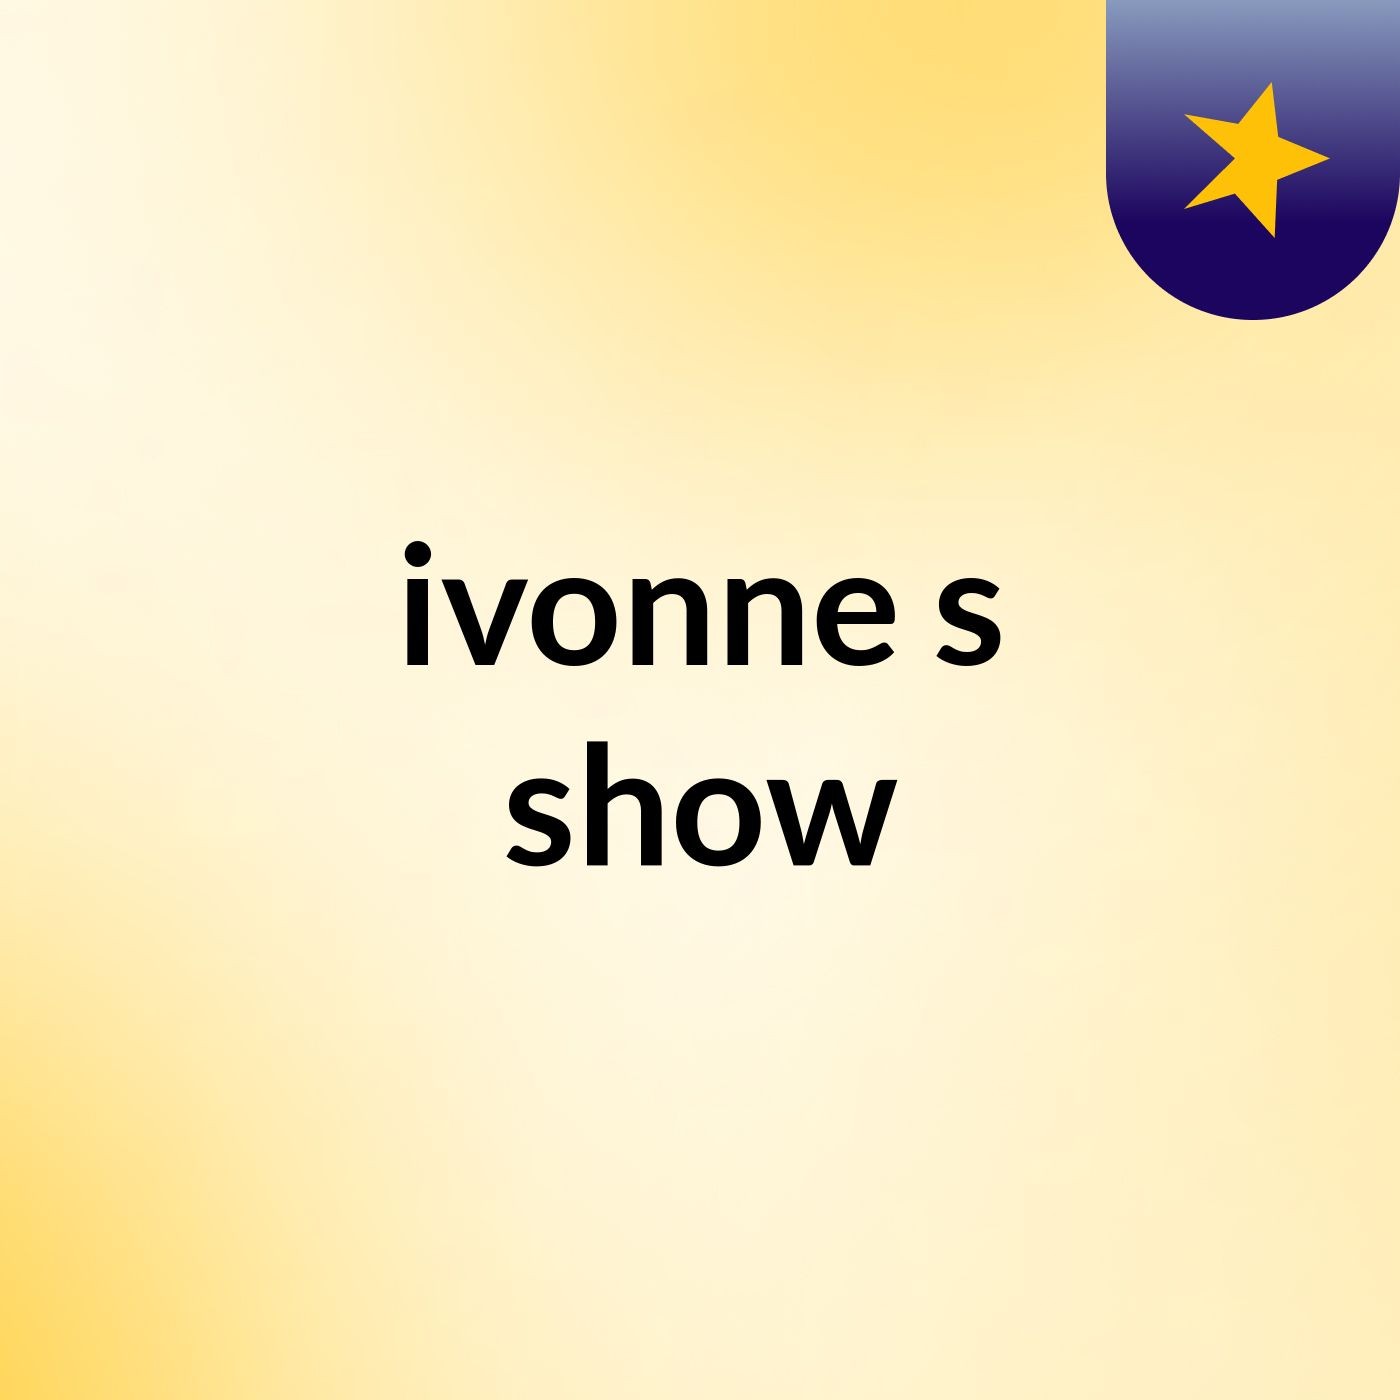 ivonne's show